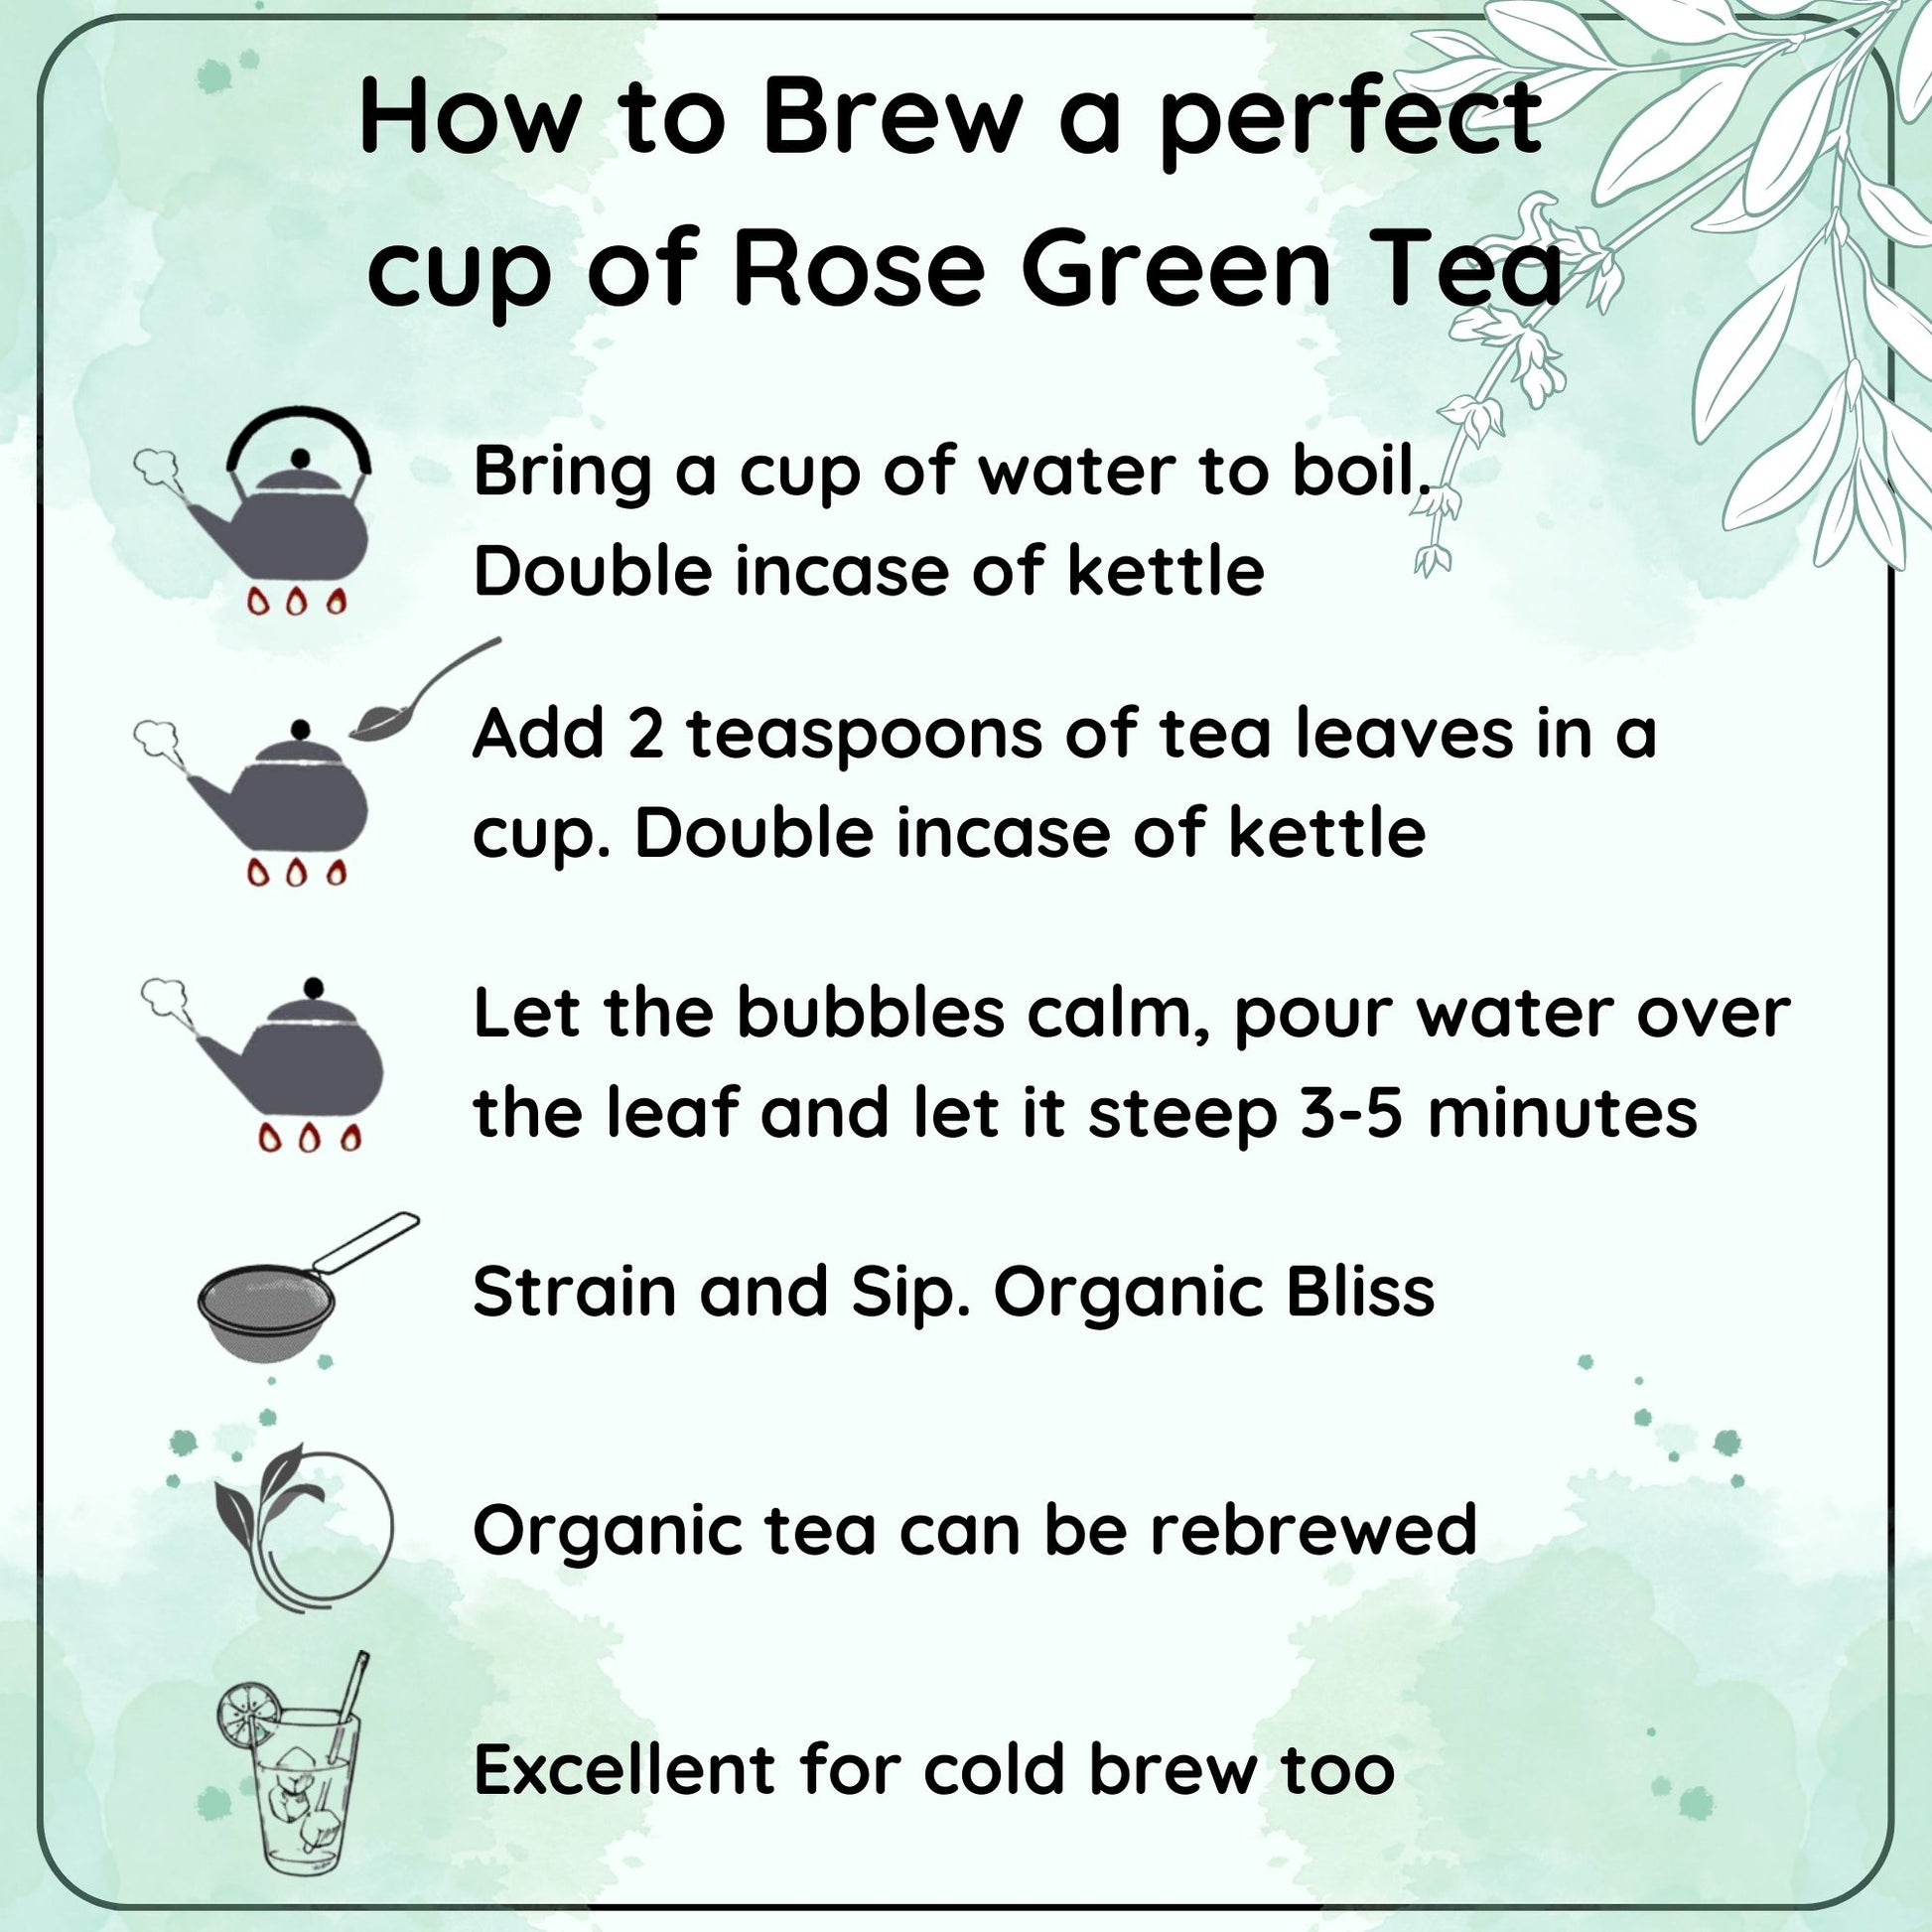 BEAUTEA Green Rose - How to Make Beautea Green Rose Tea with Organic Darjeeling Leaves and Rose Petals - Radhikas Fine Teas and Whatnots